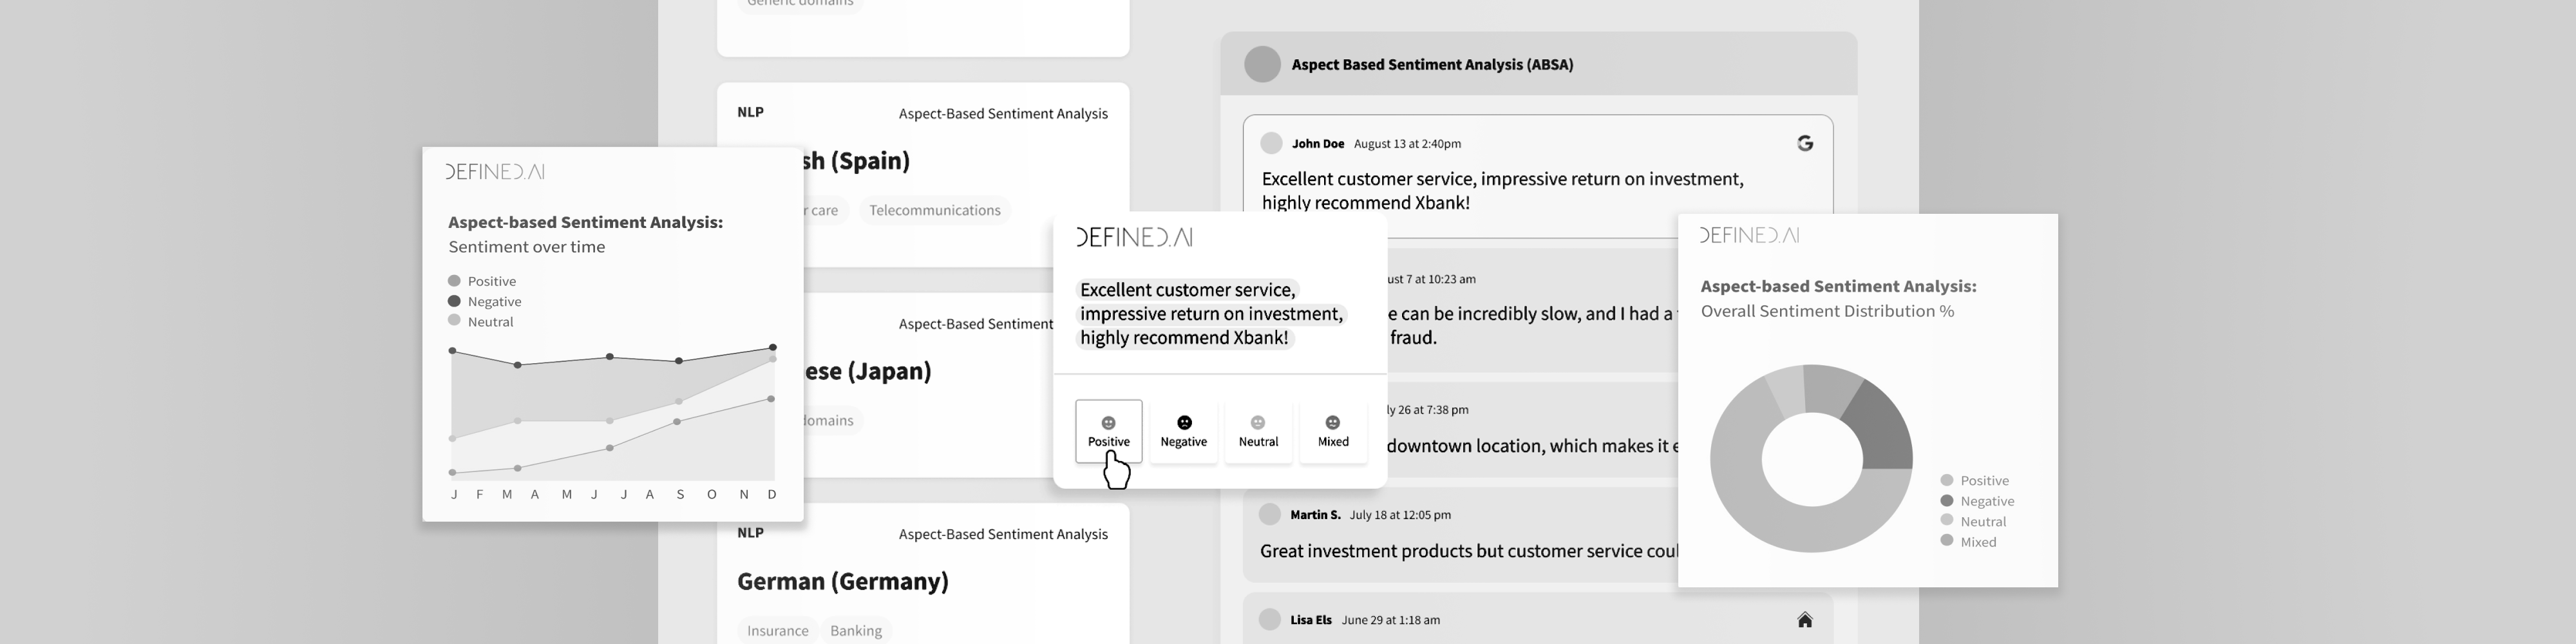 Open-source datasets for Aspect-Based Sentiment Analysis